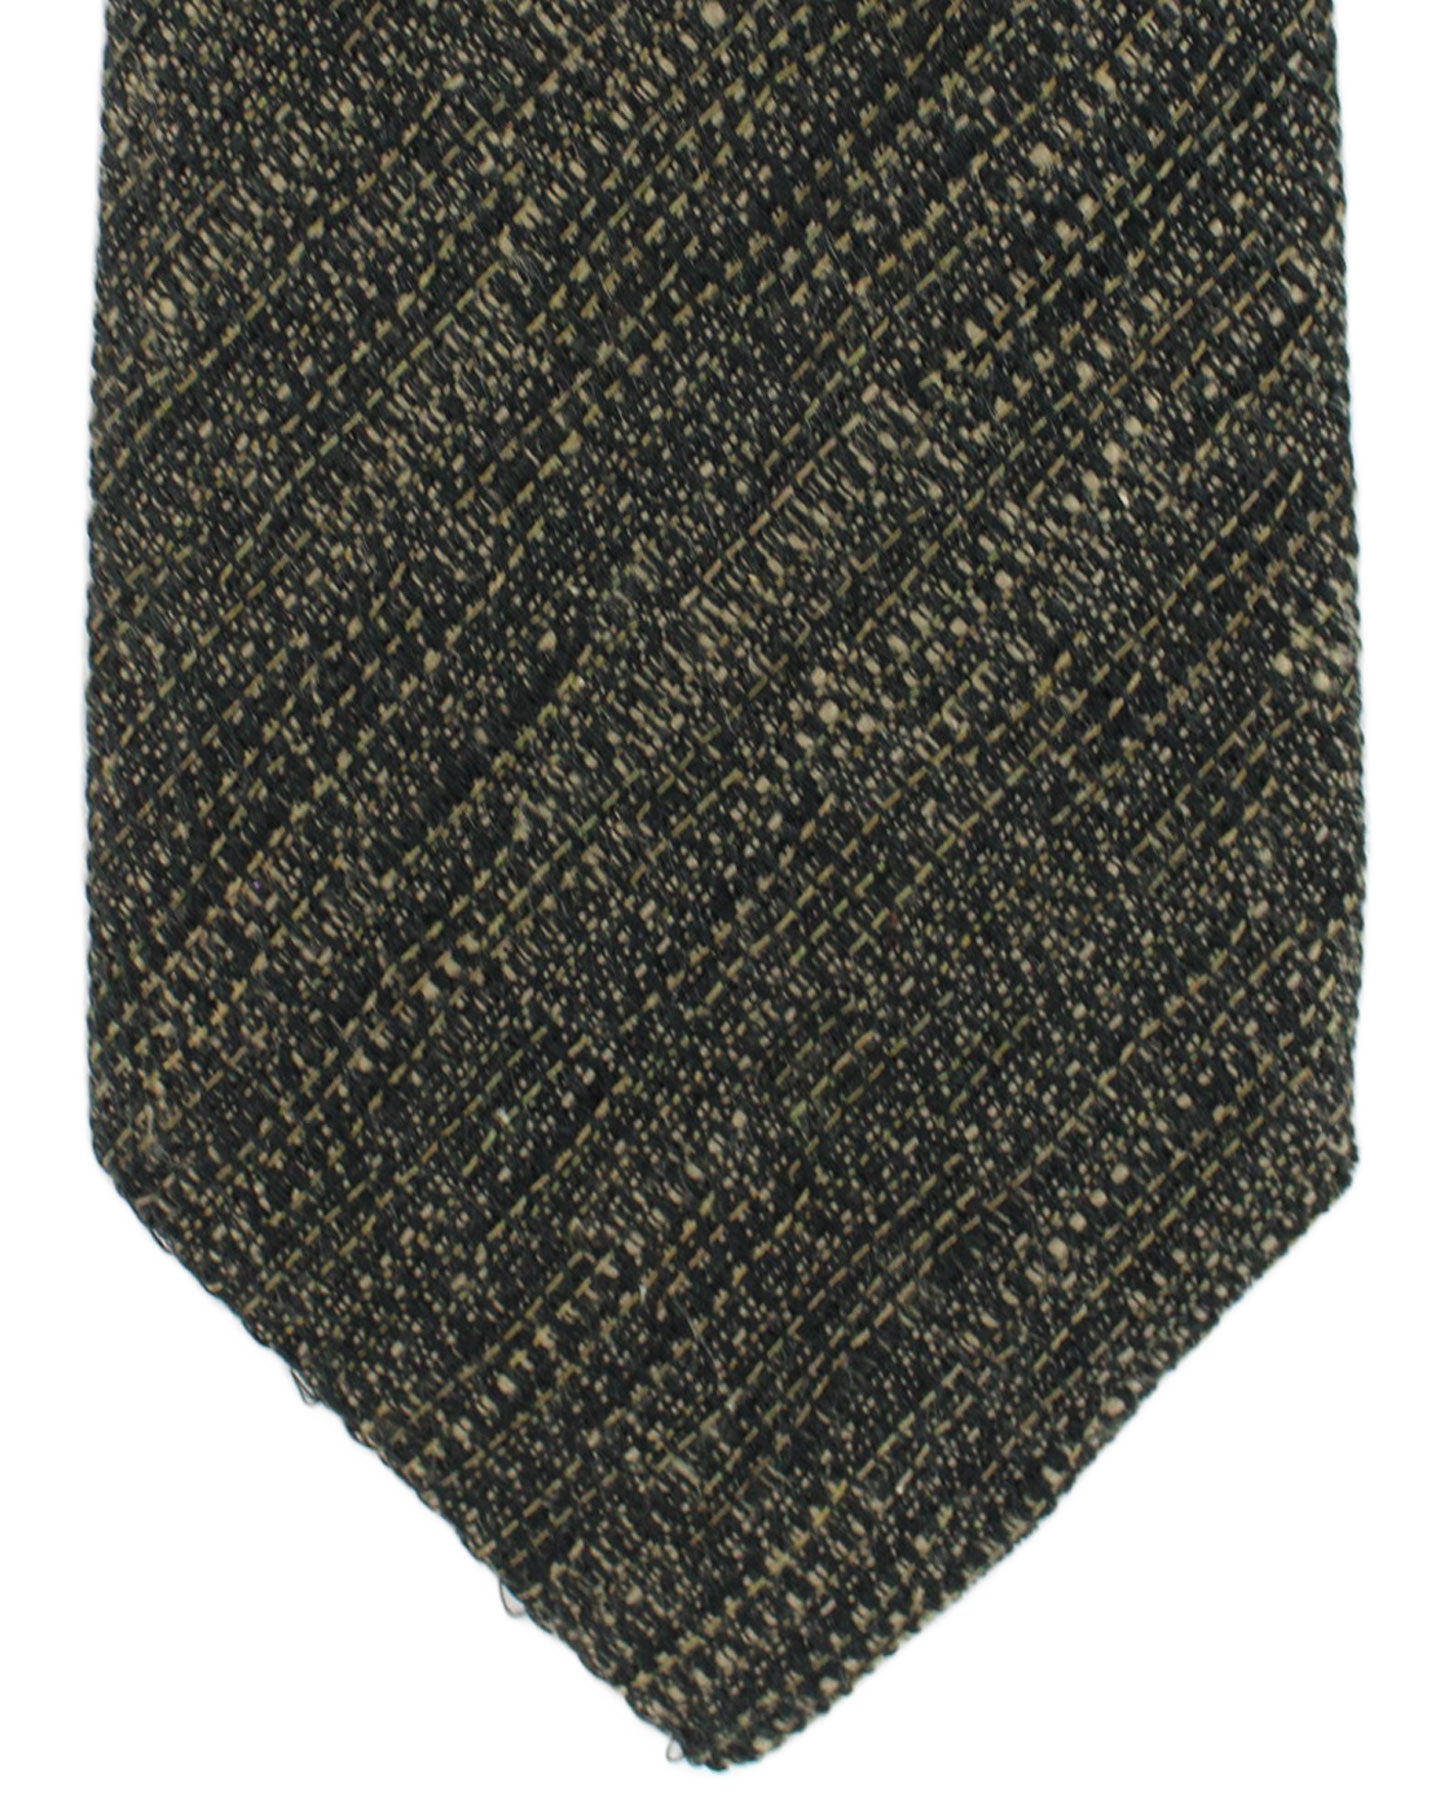 Ungaro Cotton Silk Tie Gray Green Design - Narrow Cut Designer Necktie